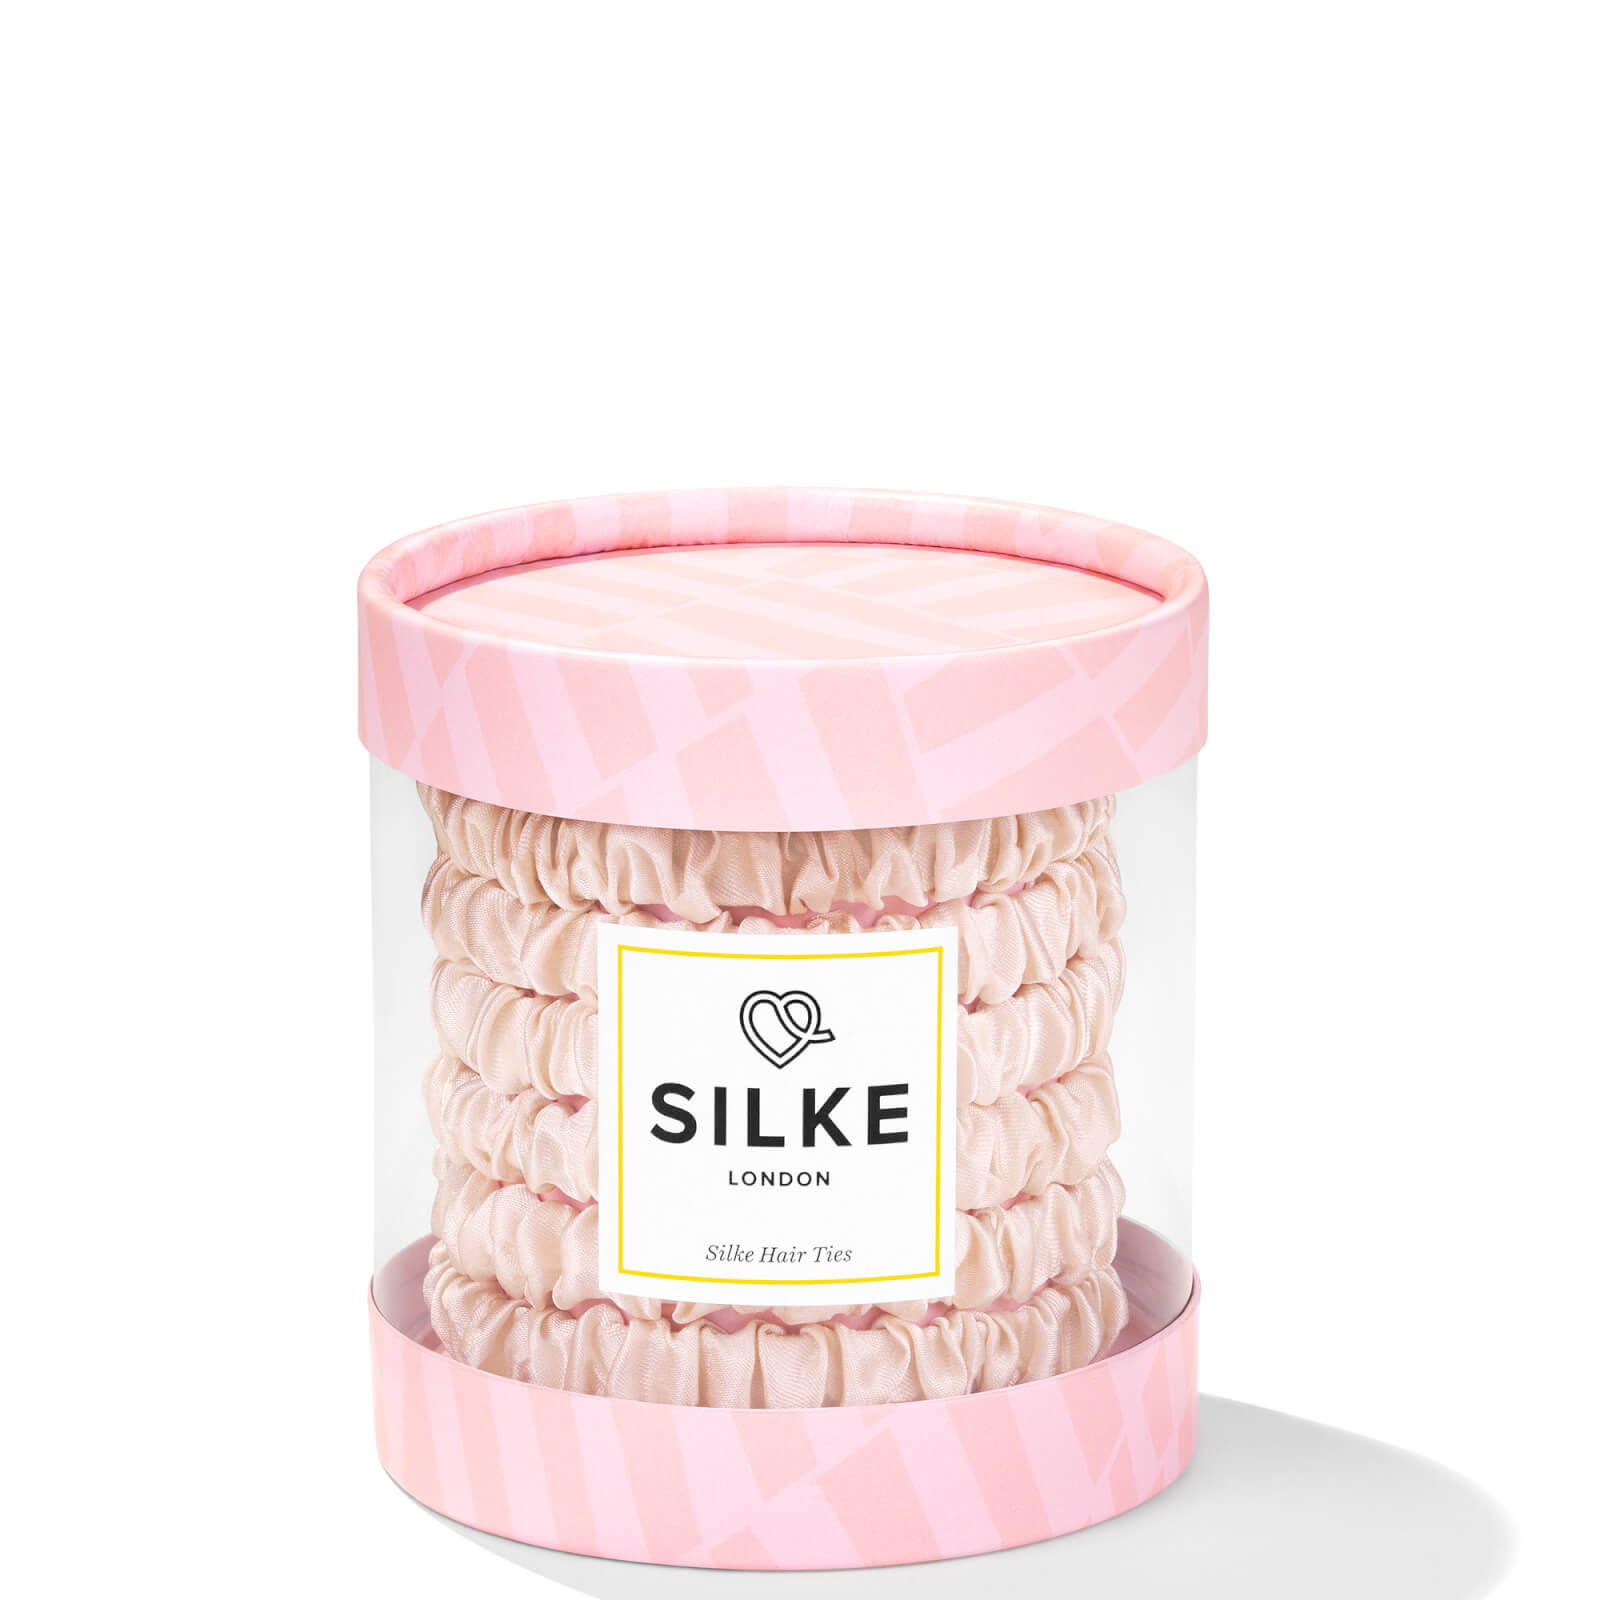 SILKE London Hair Ties - Coco product